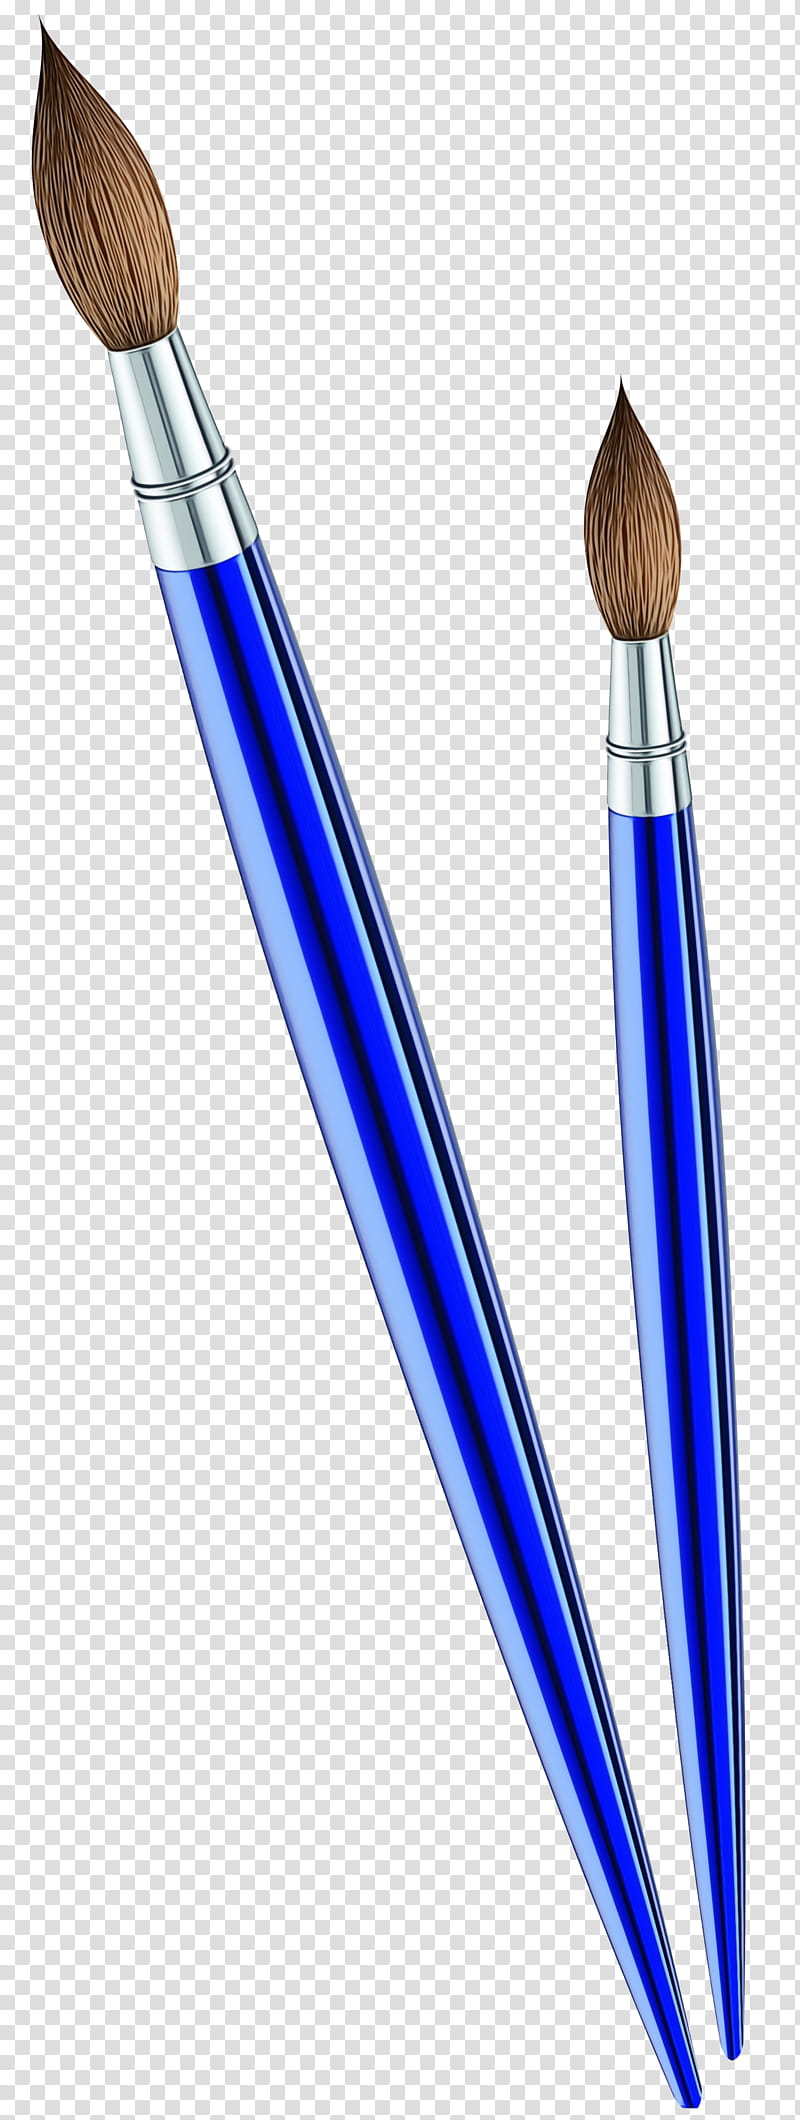 Brush, Ballpoint Pen, Makeup Brushes, Ball Pen, Eye, Tool, Office Supplies transparent background PNG clipart